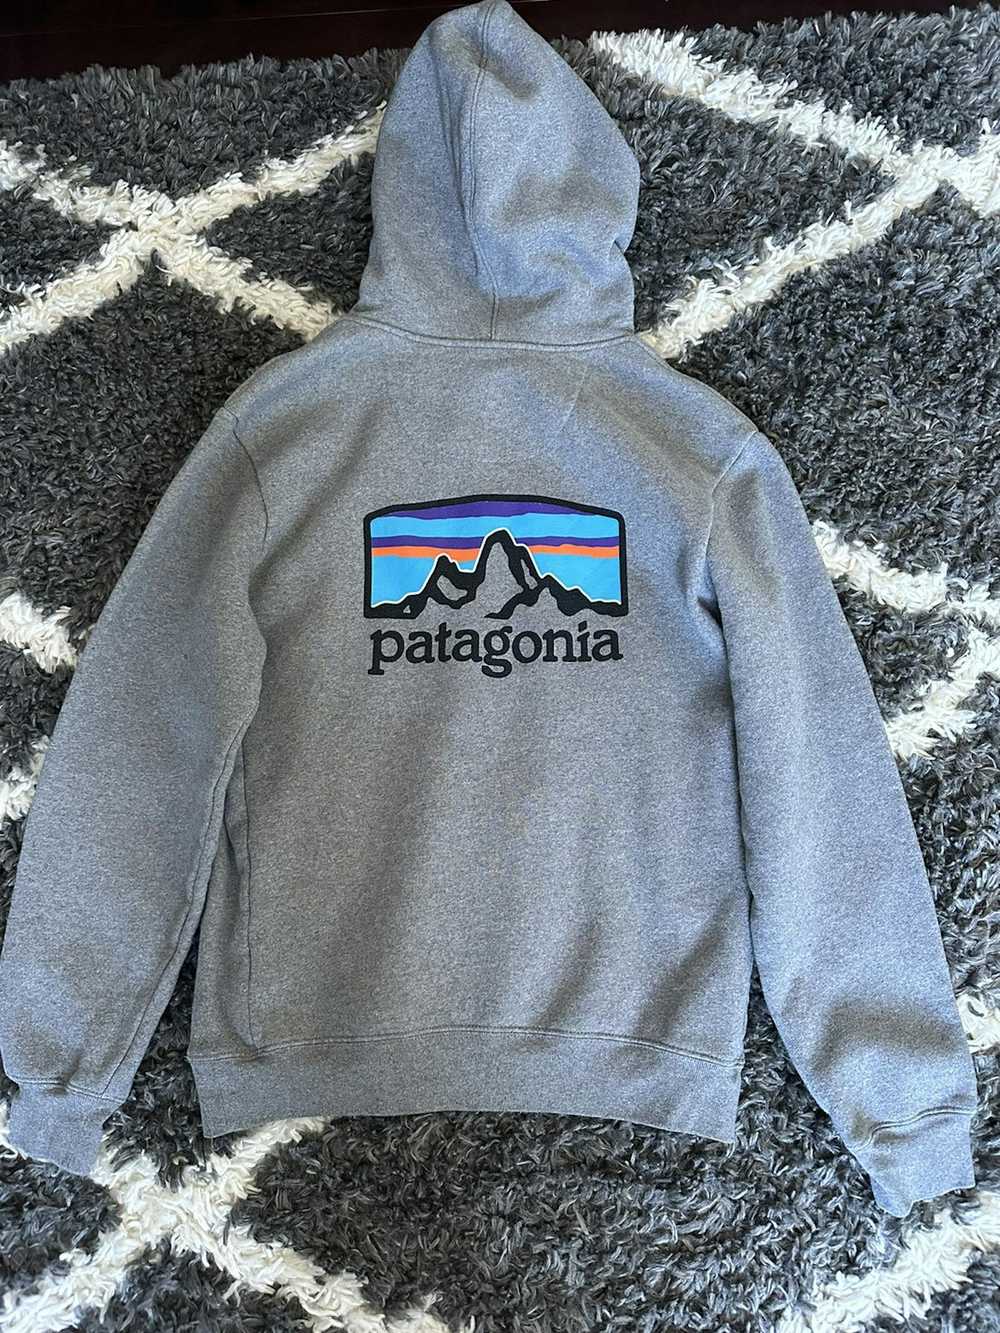 Patagonia Patagonia hoodie size small - image 4